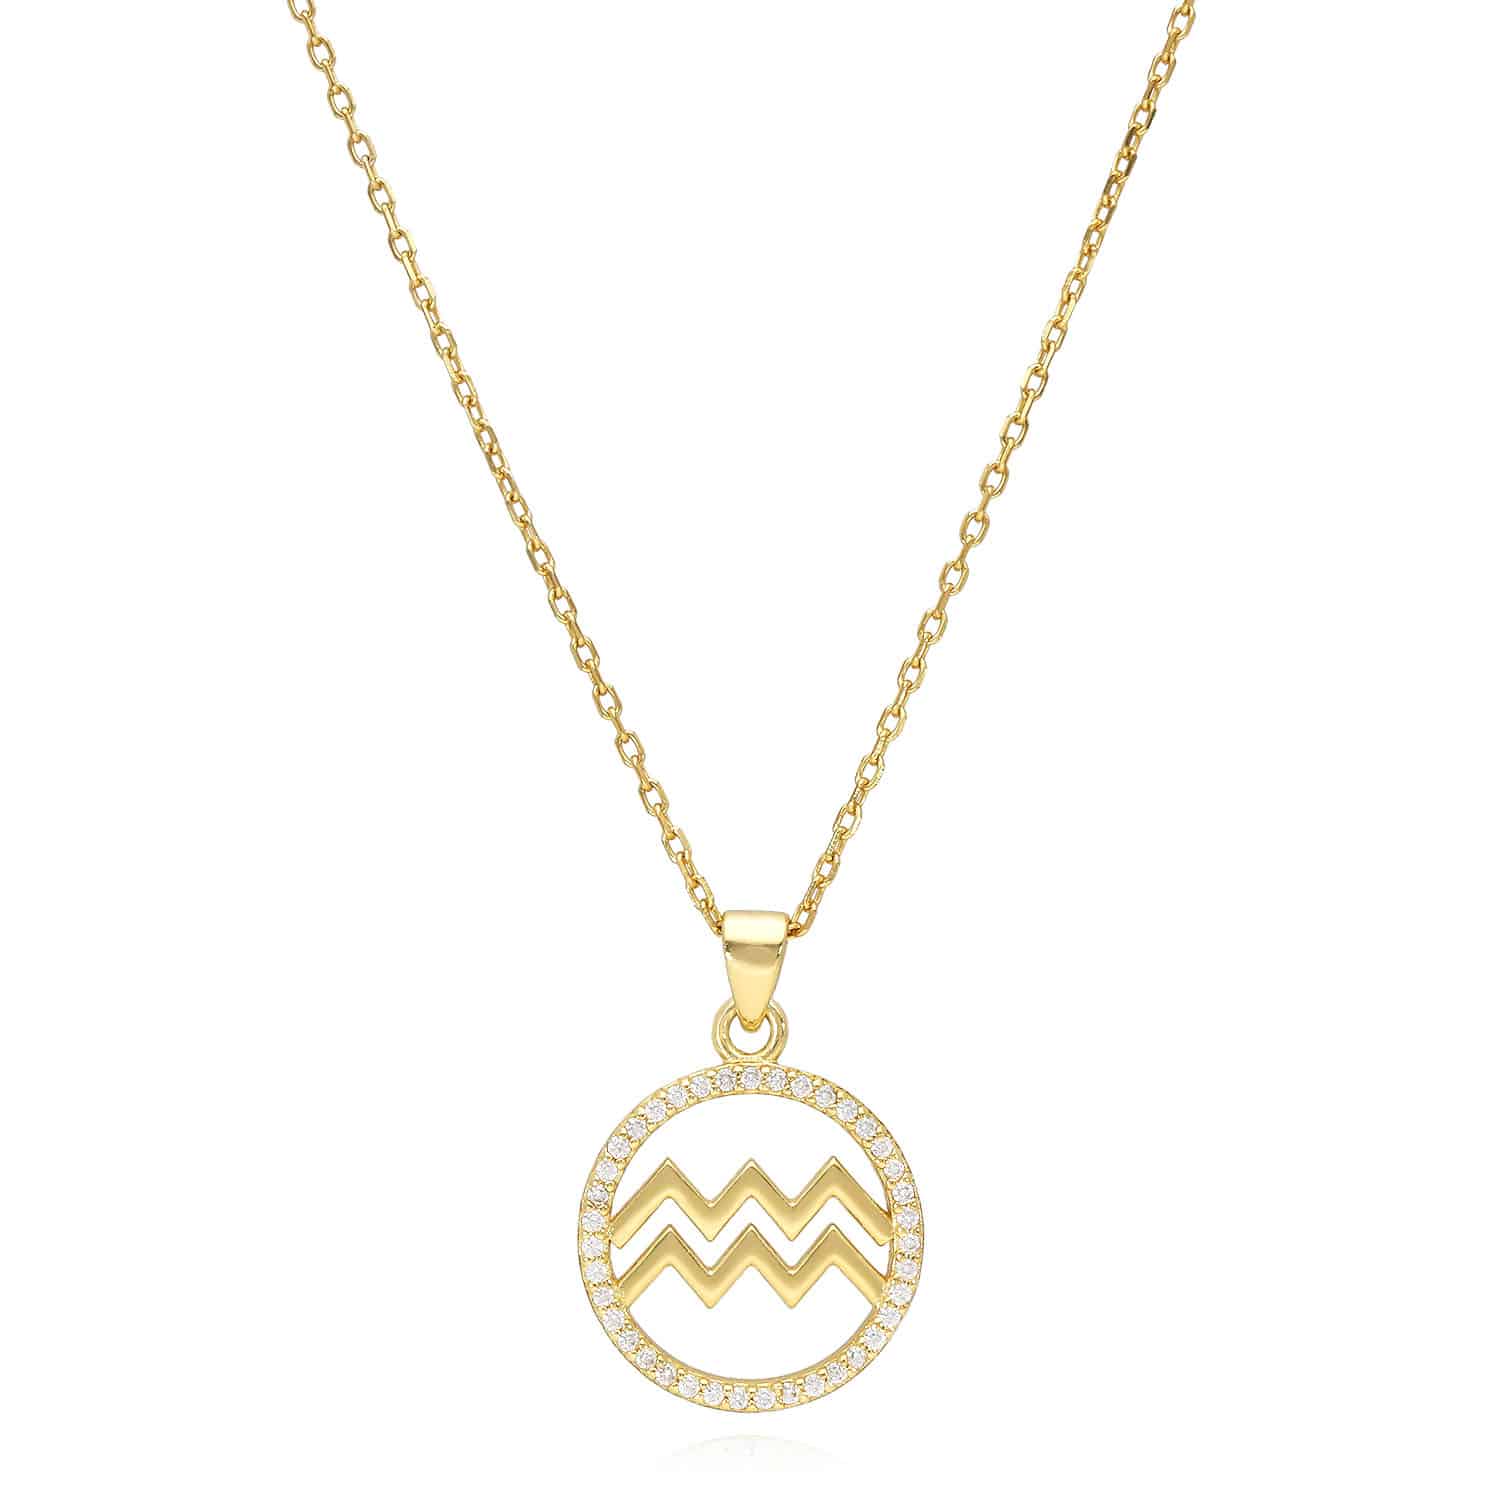 18K Gold Over Silver Simulated Diamond Zodiac Charm Pendant Necklace 16"-18" Adj - Aquarius